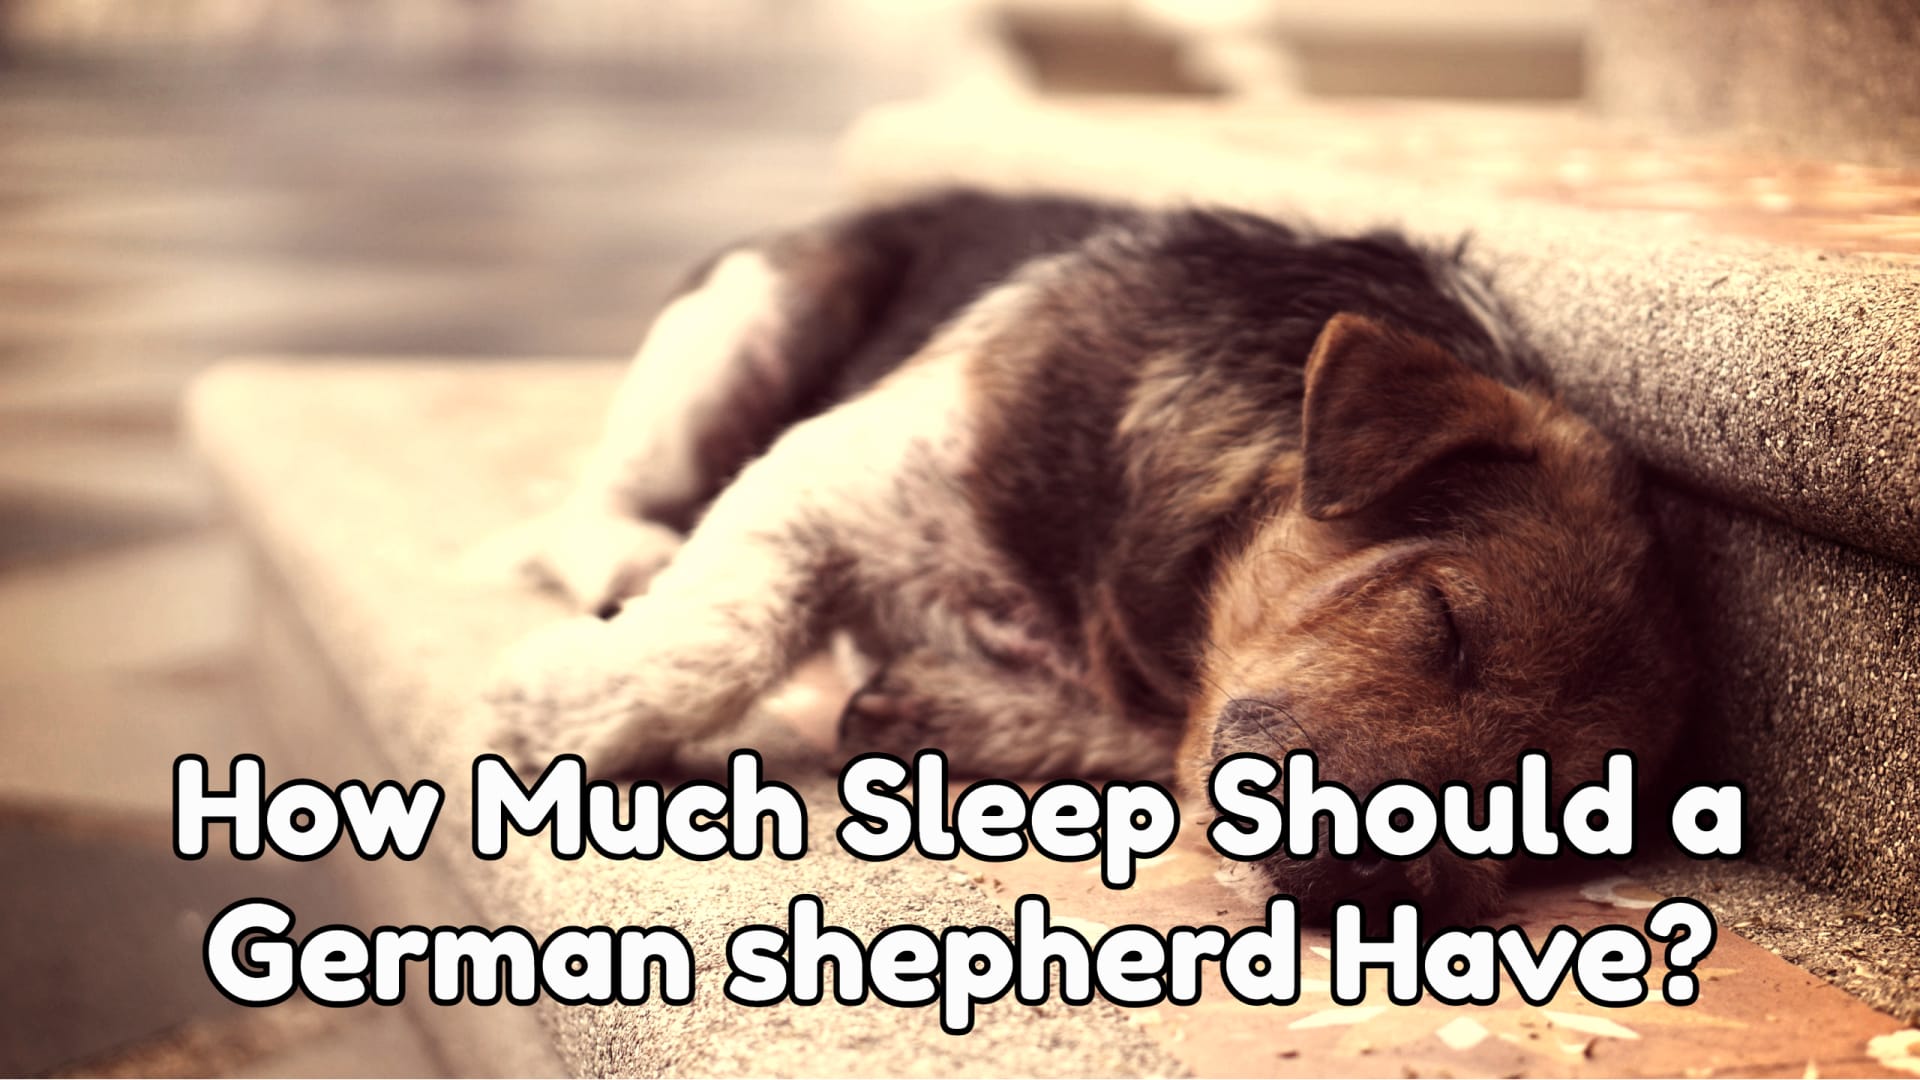 How Much Sleep Should a German shepherd Have?